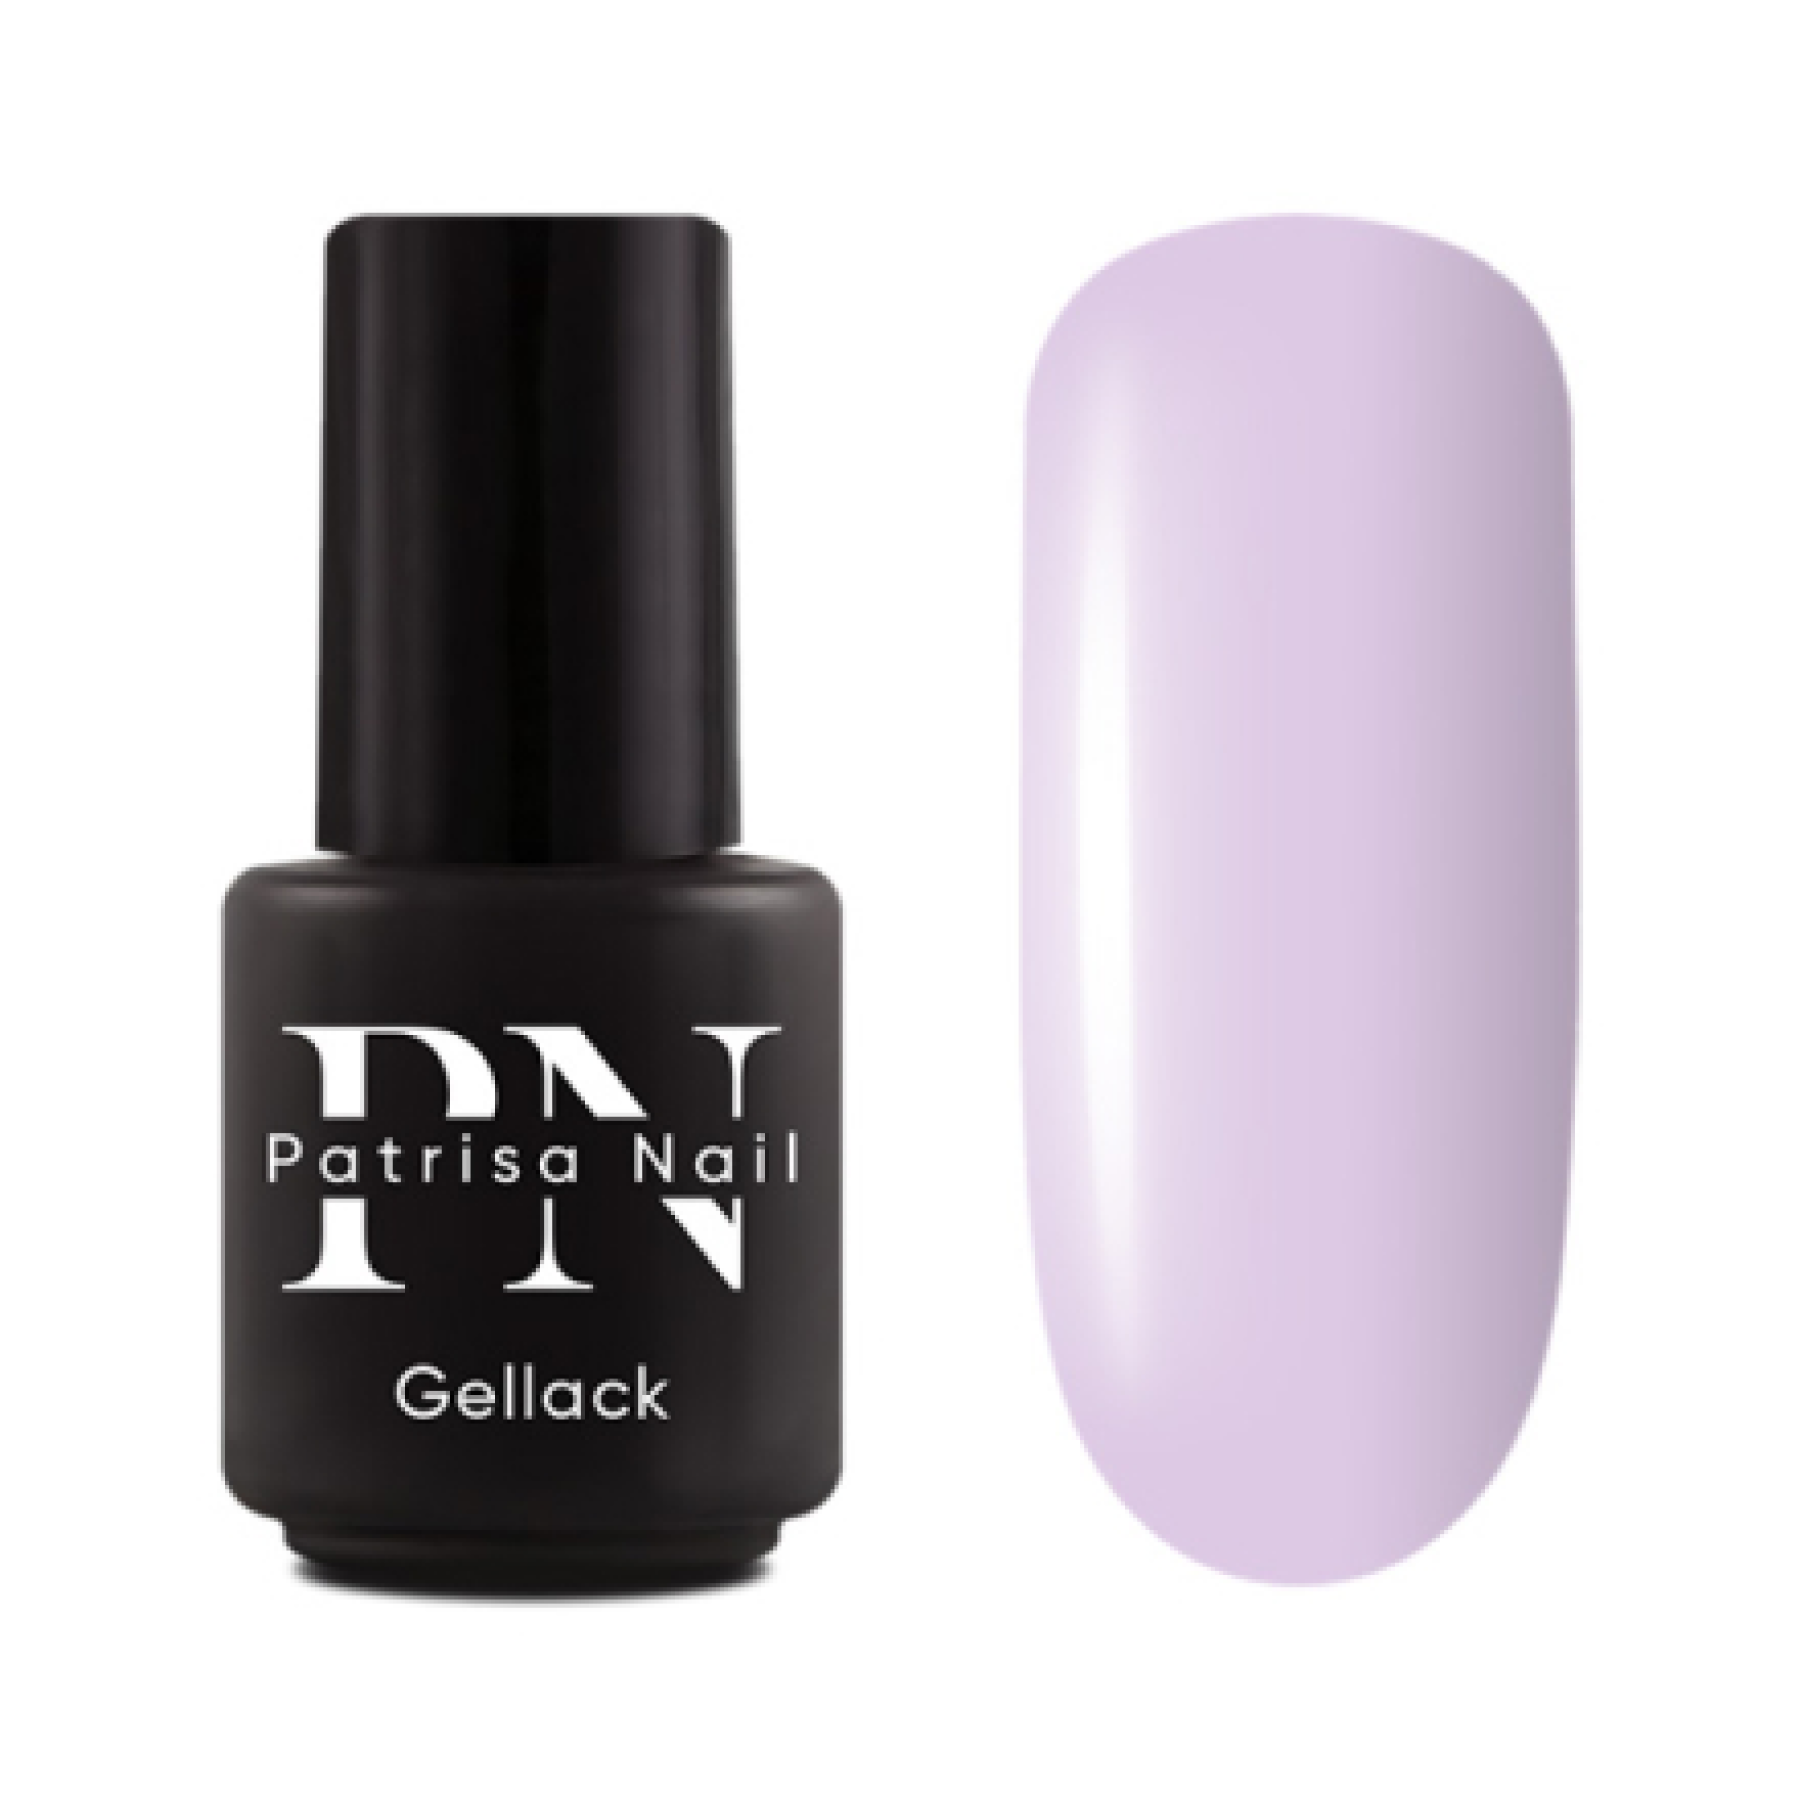 Гель-лак для ногтей Patrisa nail Axios Gel №942 Digital Lavender лавандово-розовый, 3,5 мл